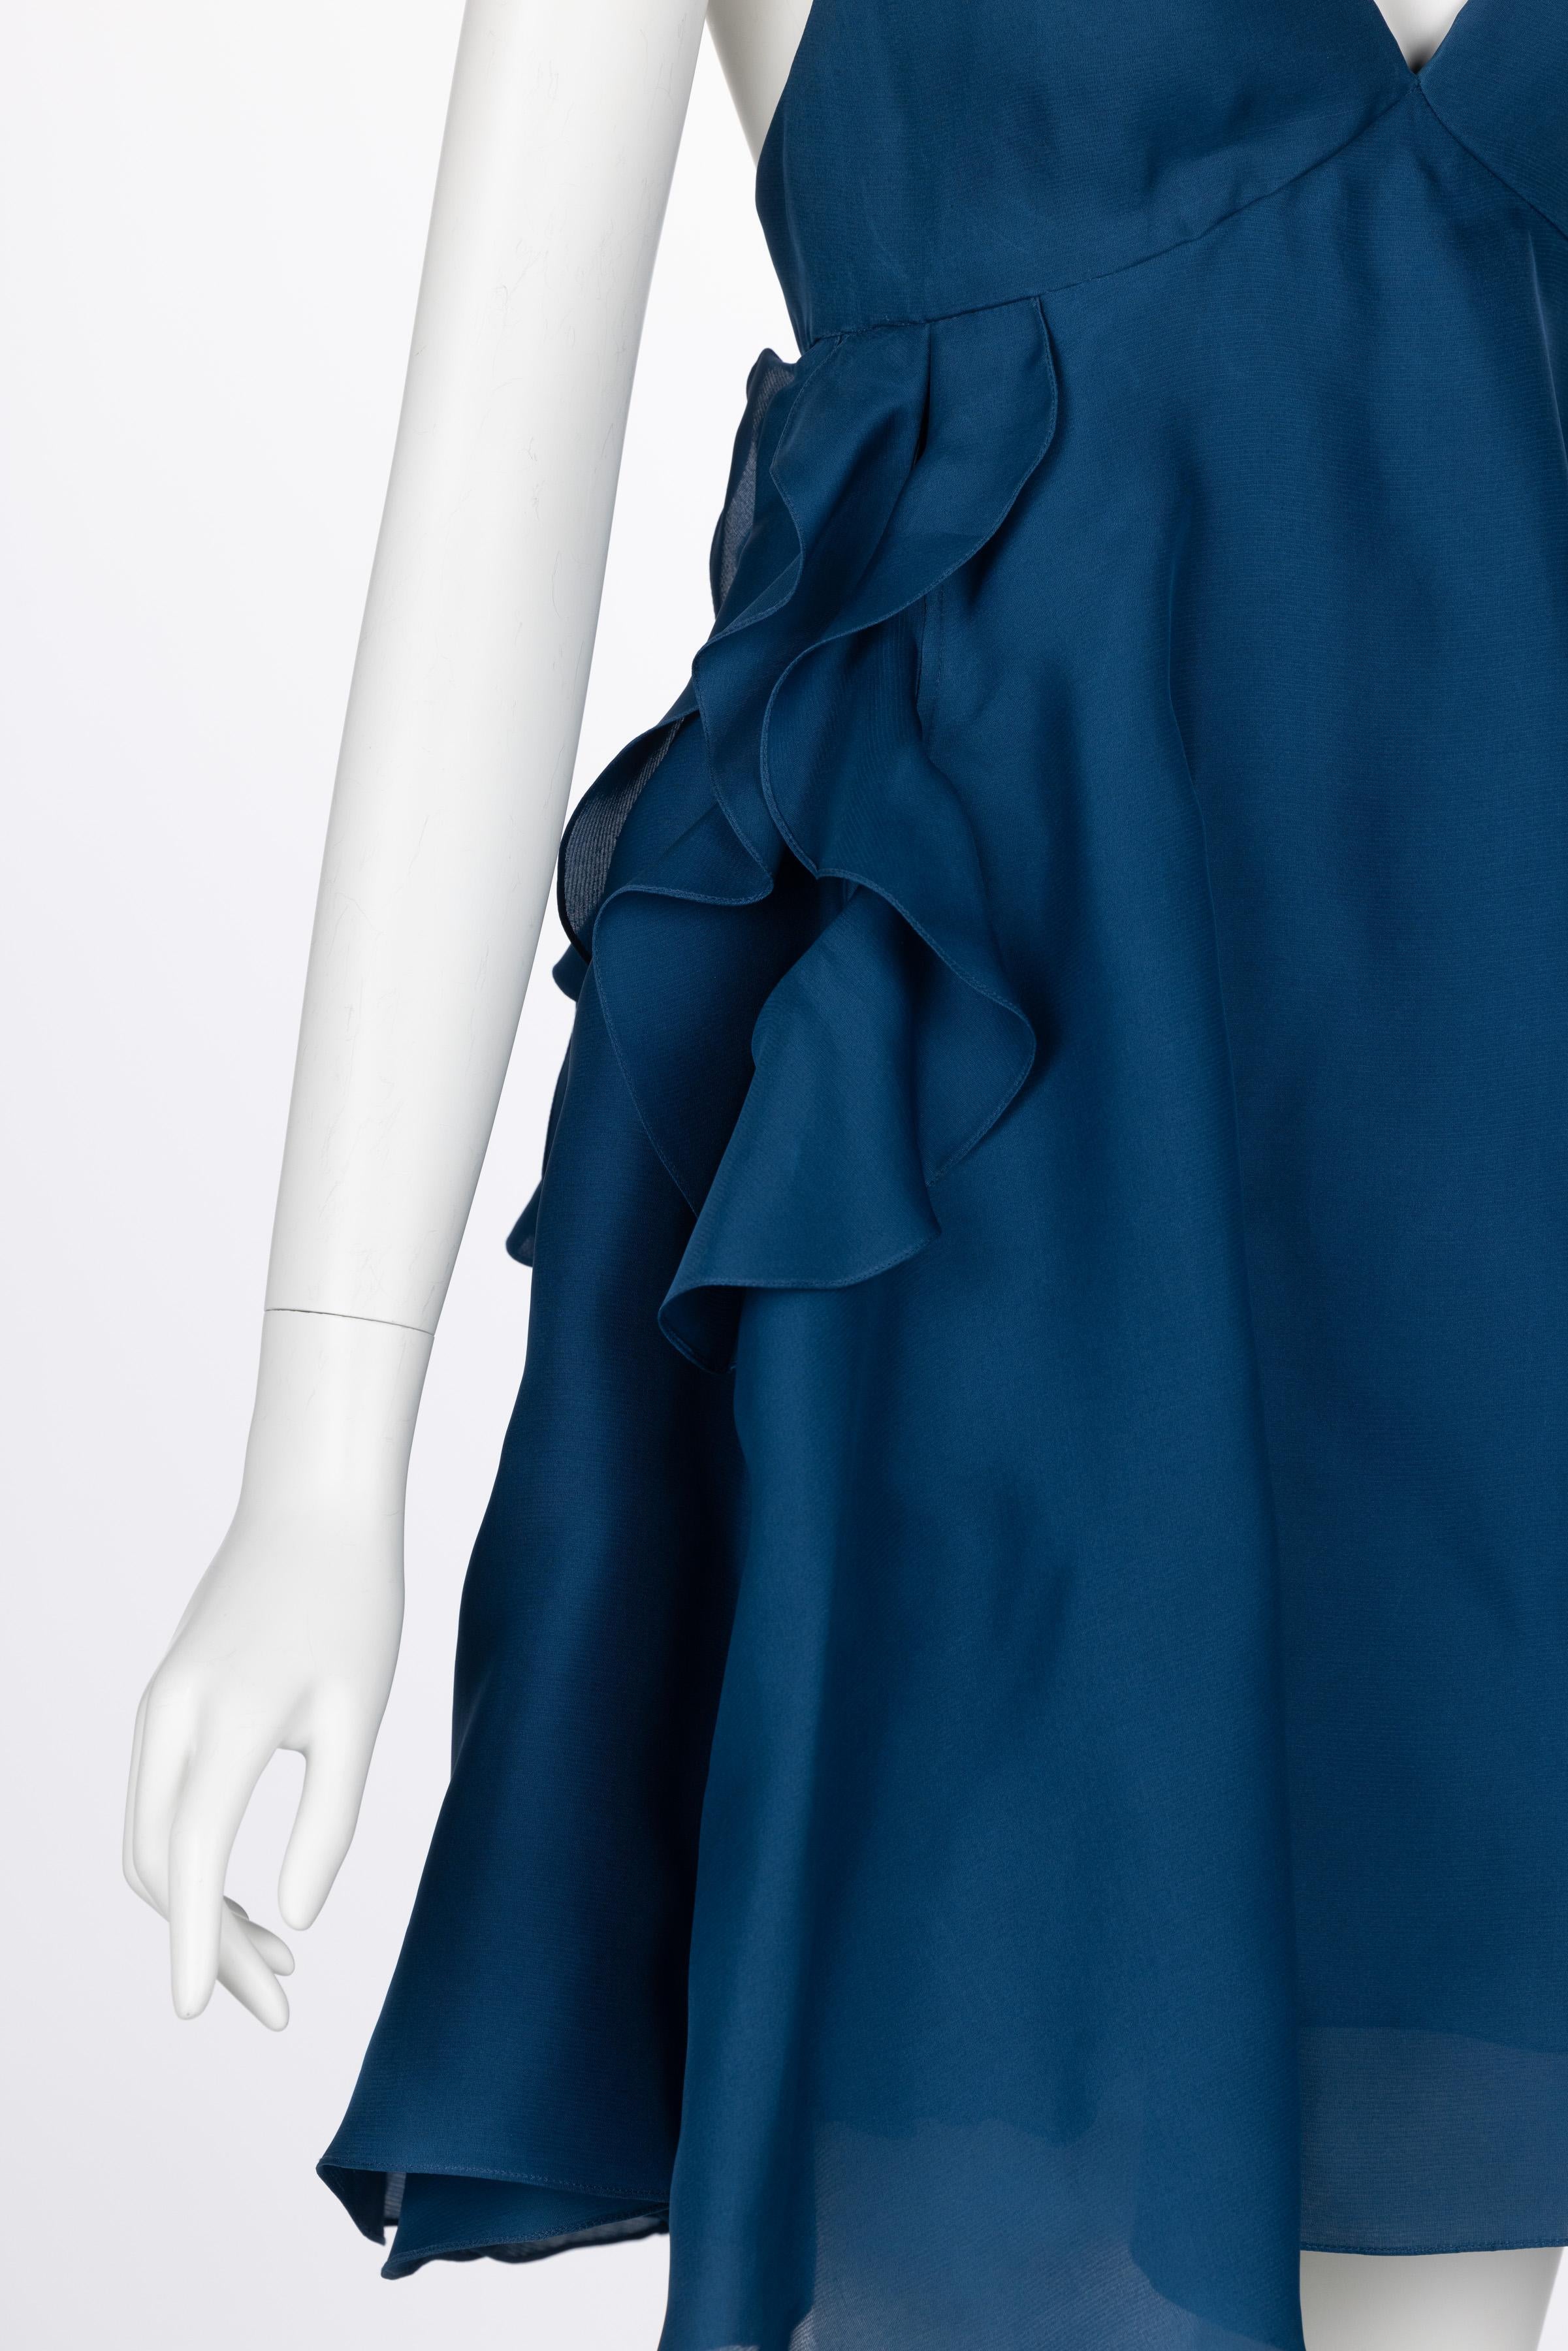 Yves Saint Laurent Blue Silk Organza Spring 2012 Runway Dress For Sale 5